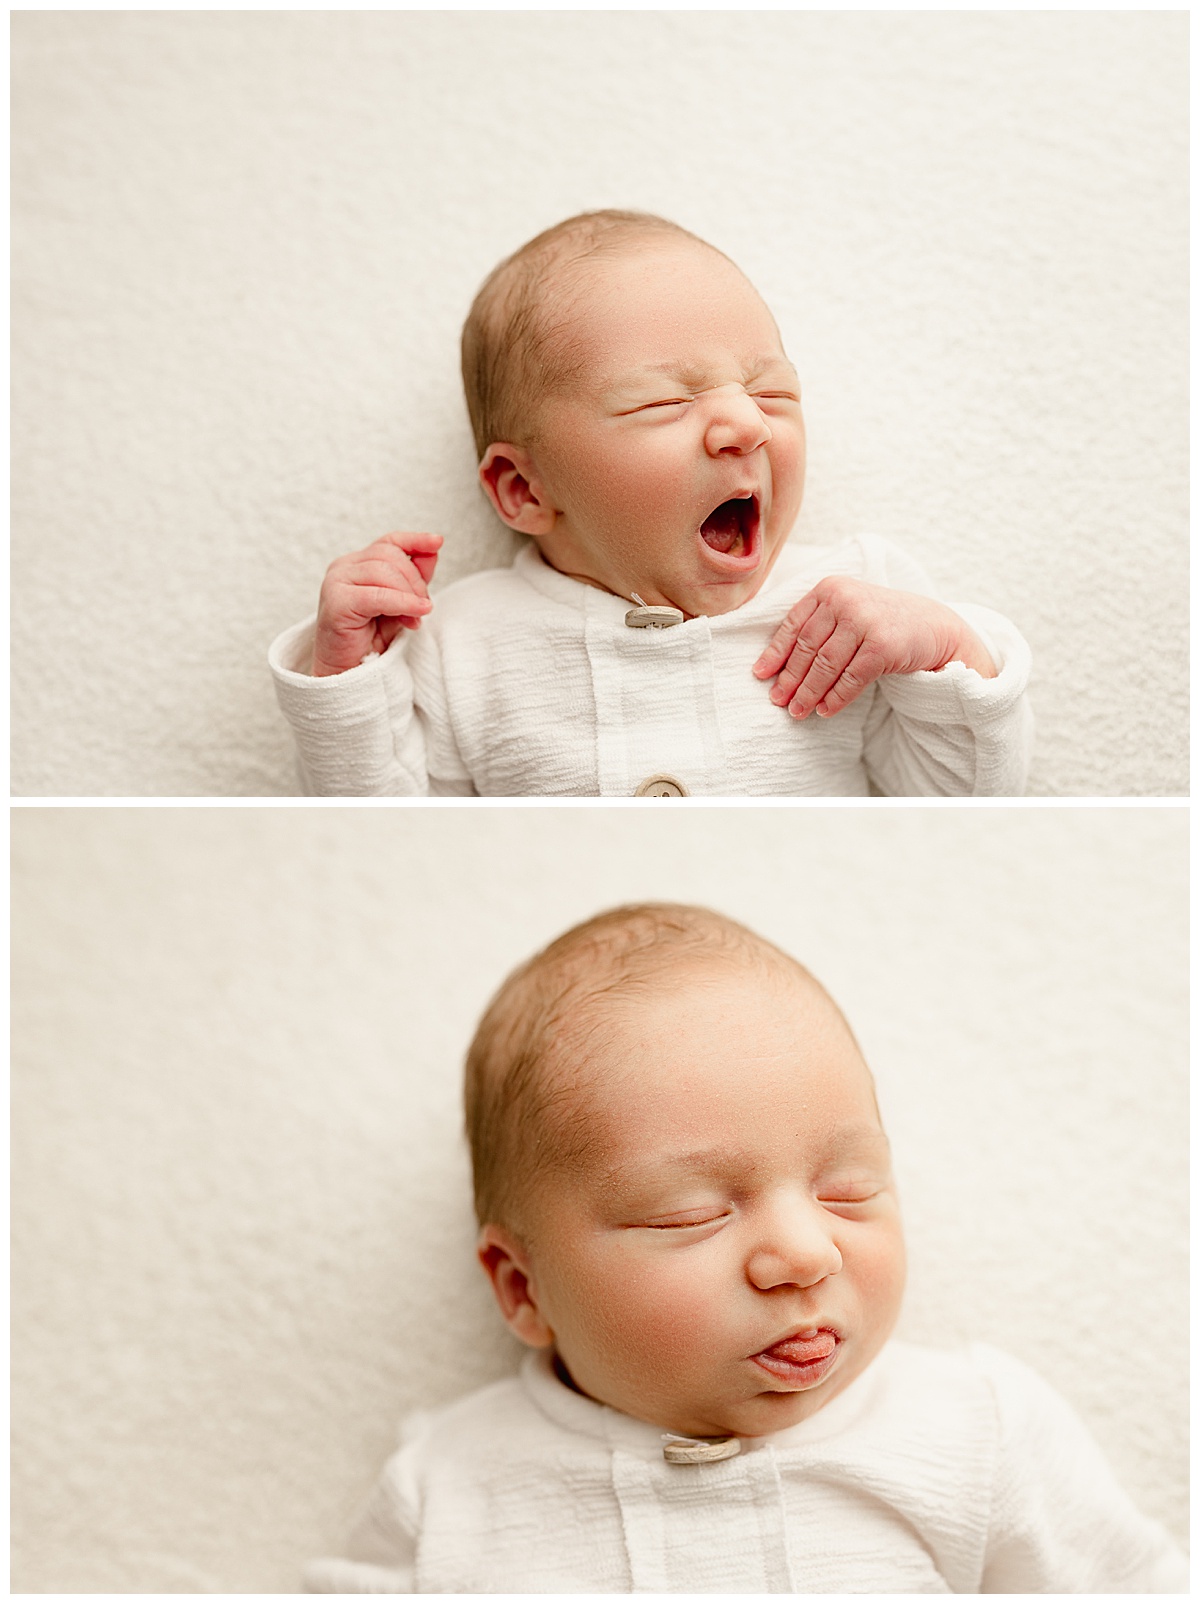 Baby yawning and smiling big for Washington DC Newborn Photographer